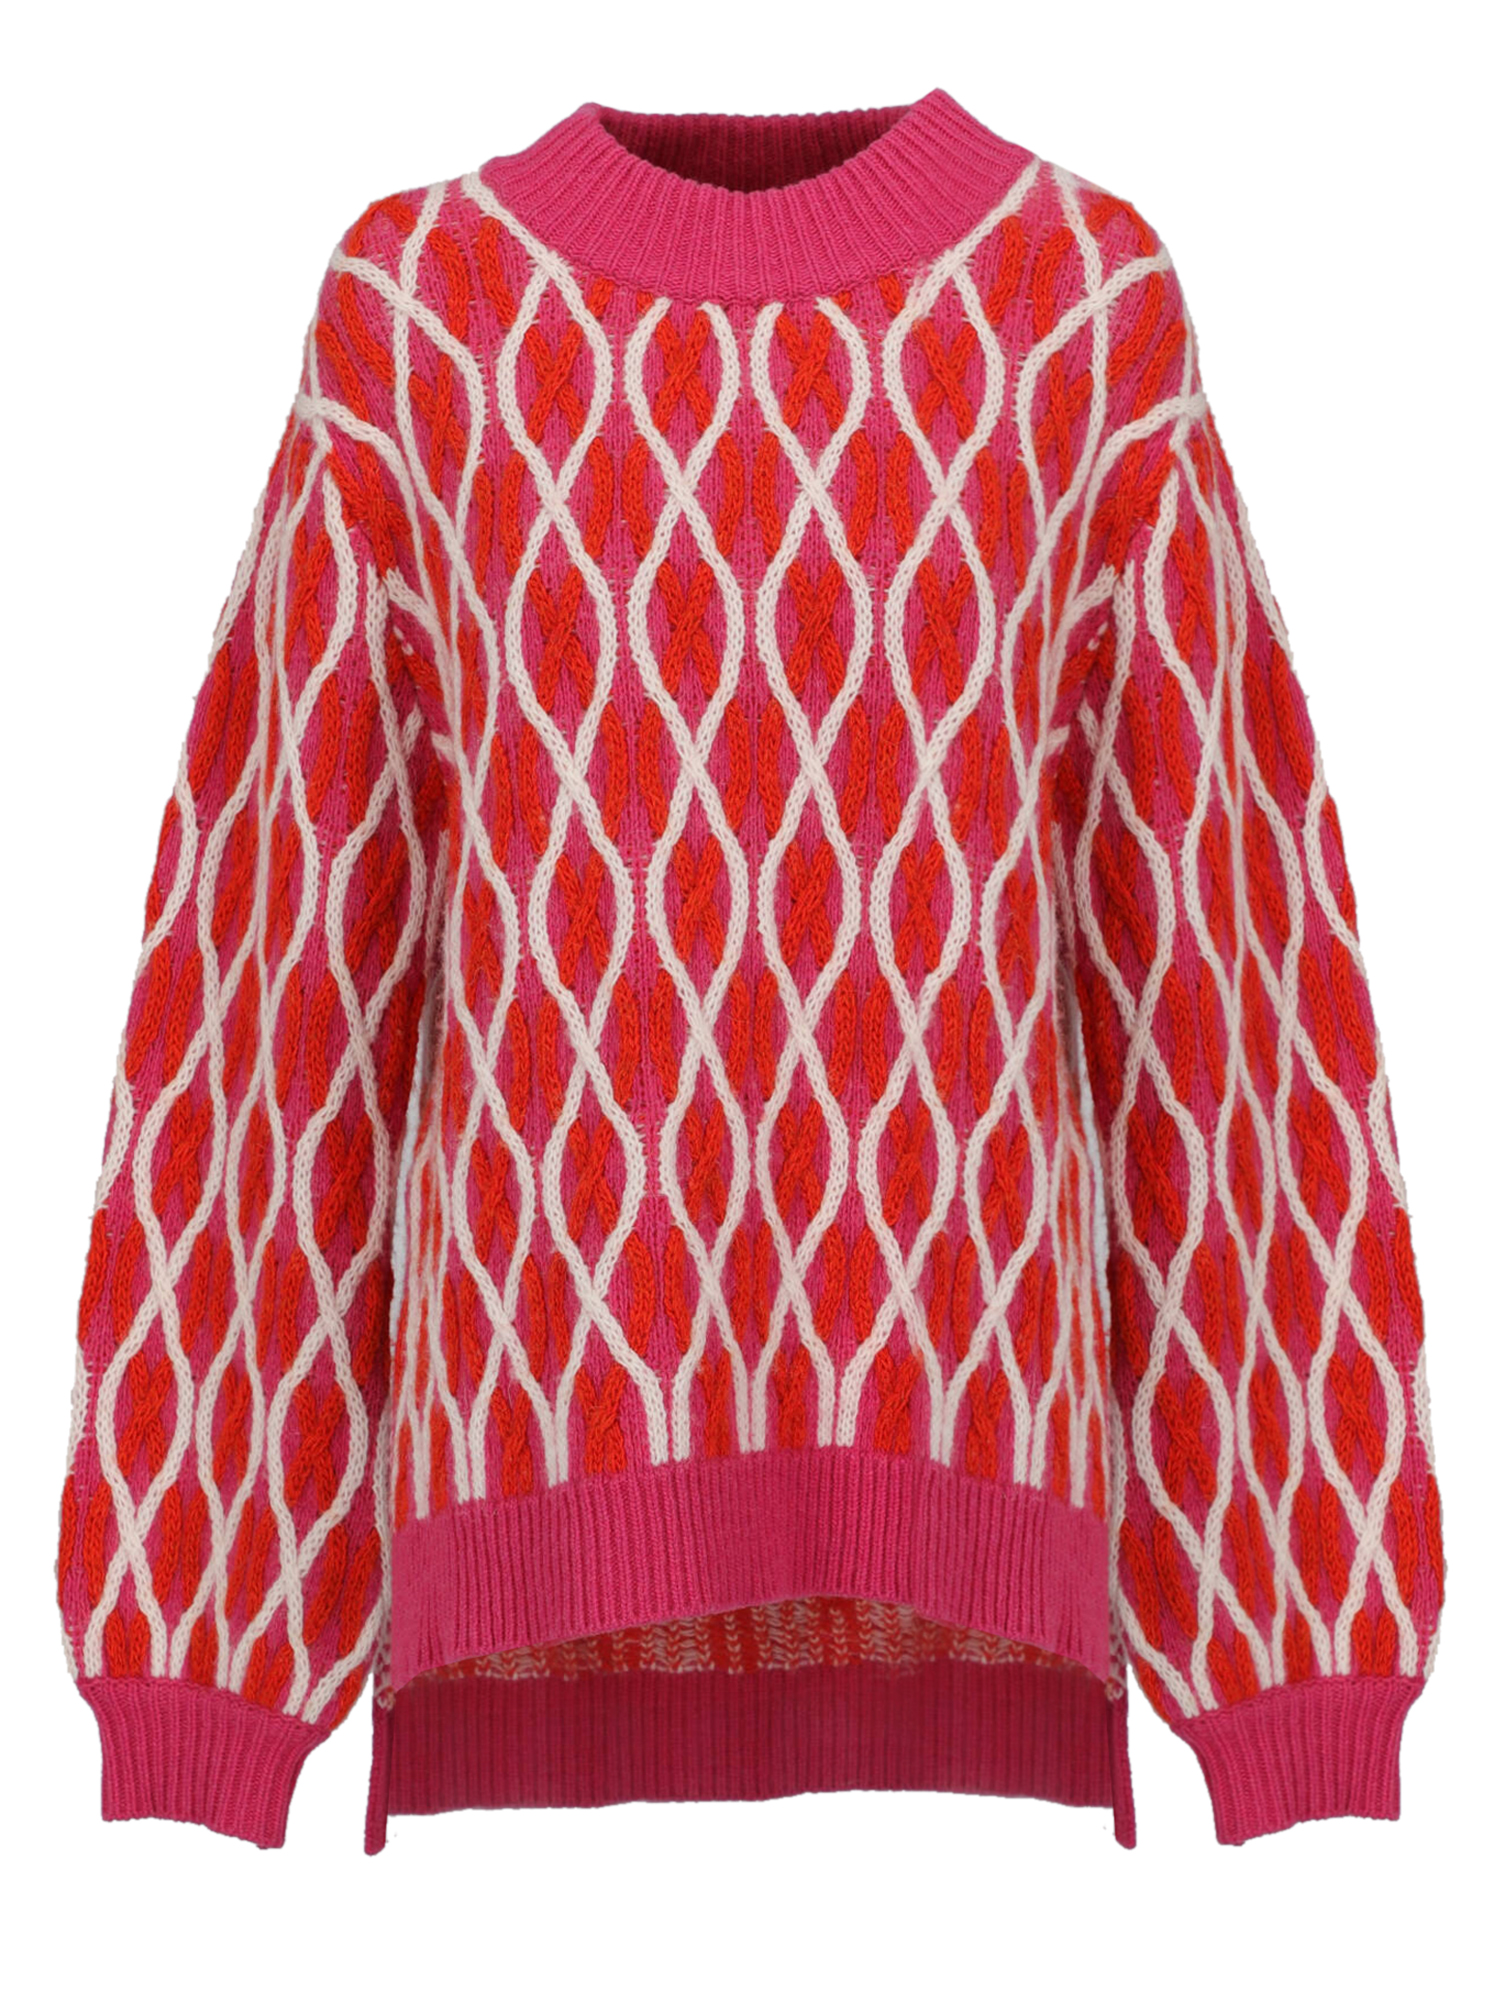 Stine Goya Femme Pulls et sweat-shirts Pink, Red, White Wool